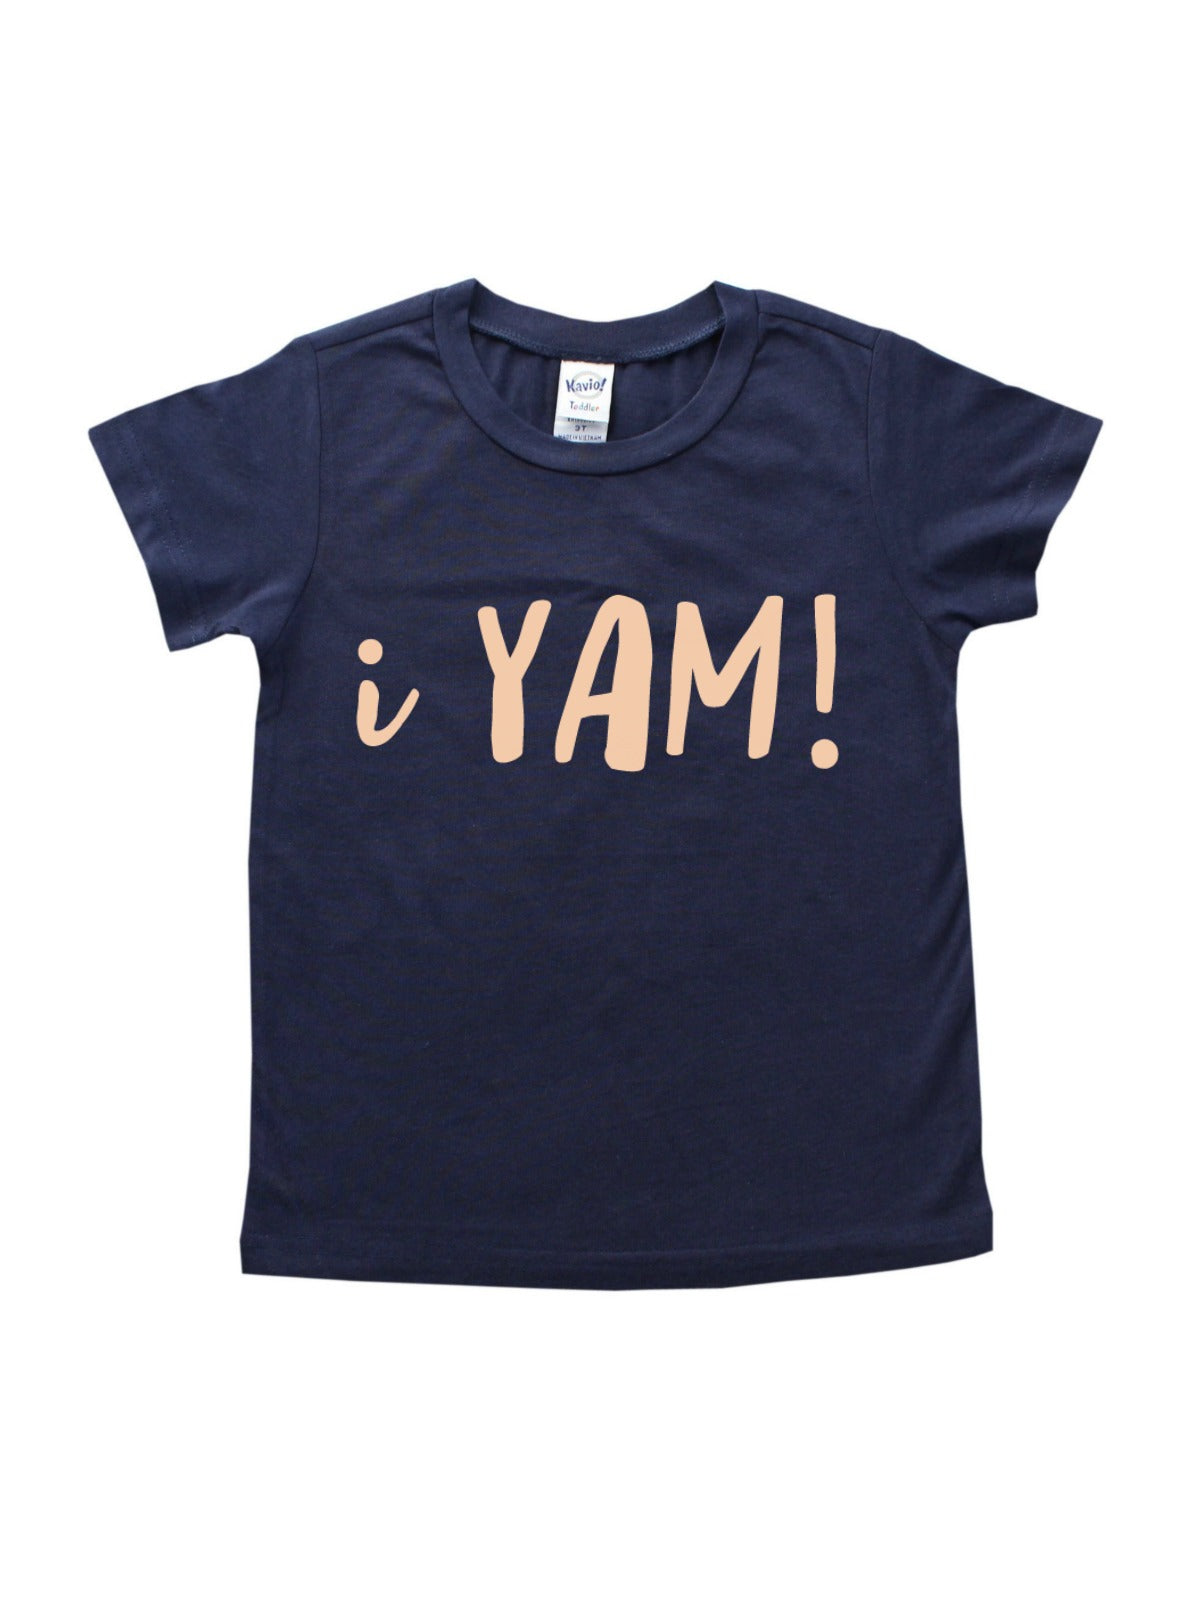 I Yam Kids Matching Thanksgiving Shirt in Navy Blue